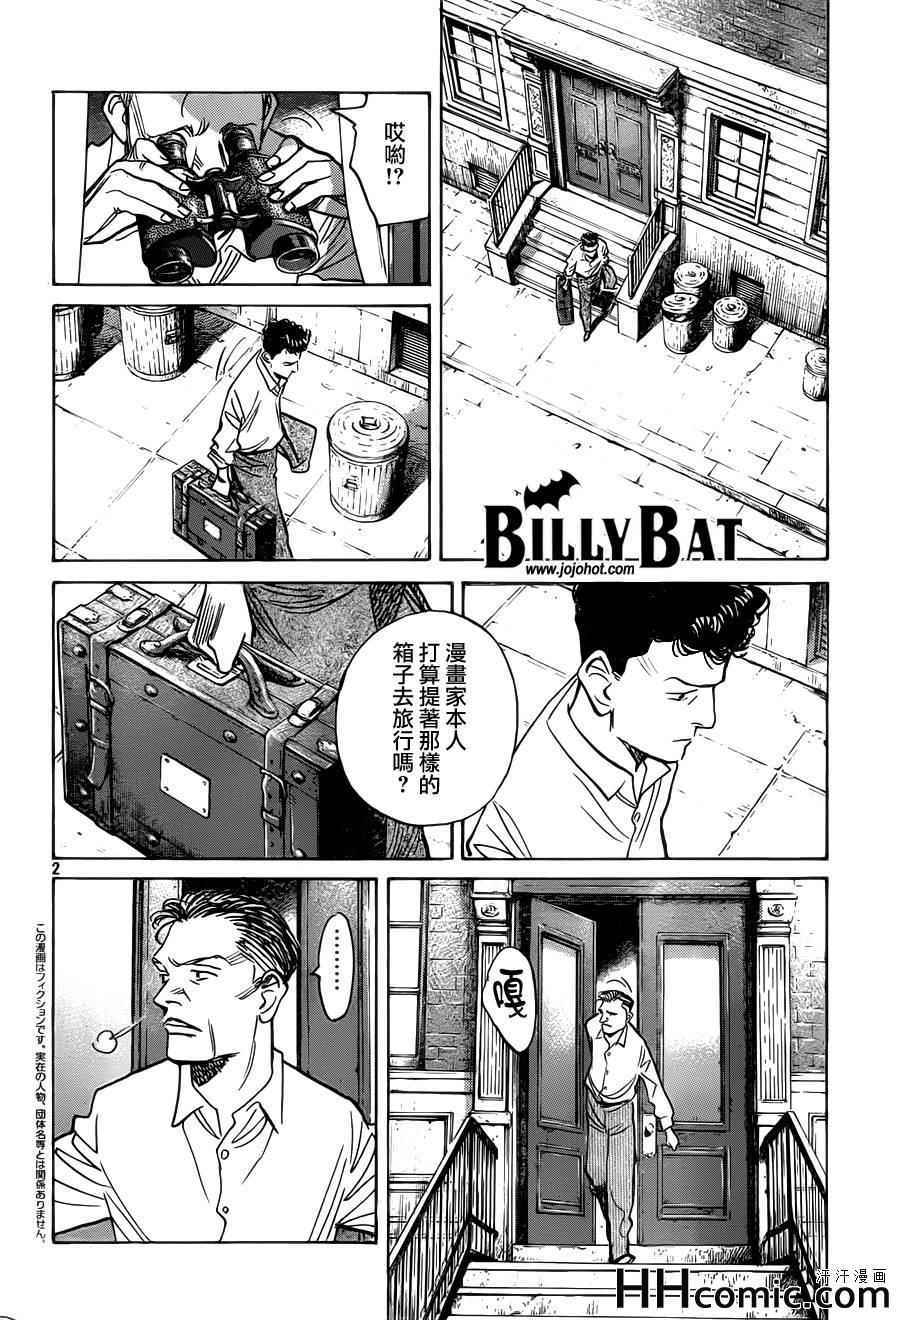 Billy_Bat - 第111話 - 2